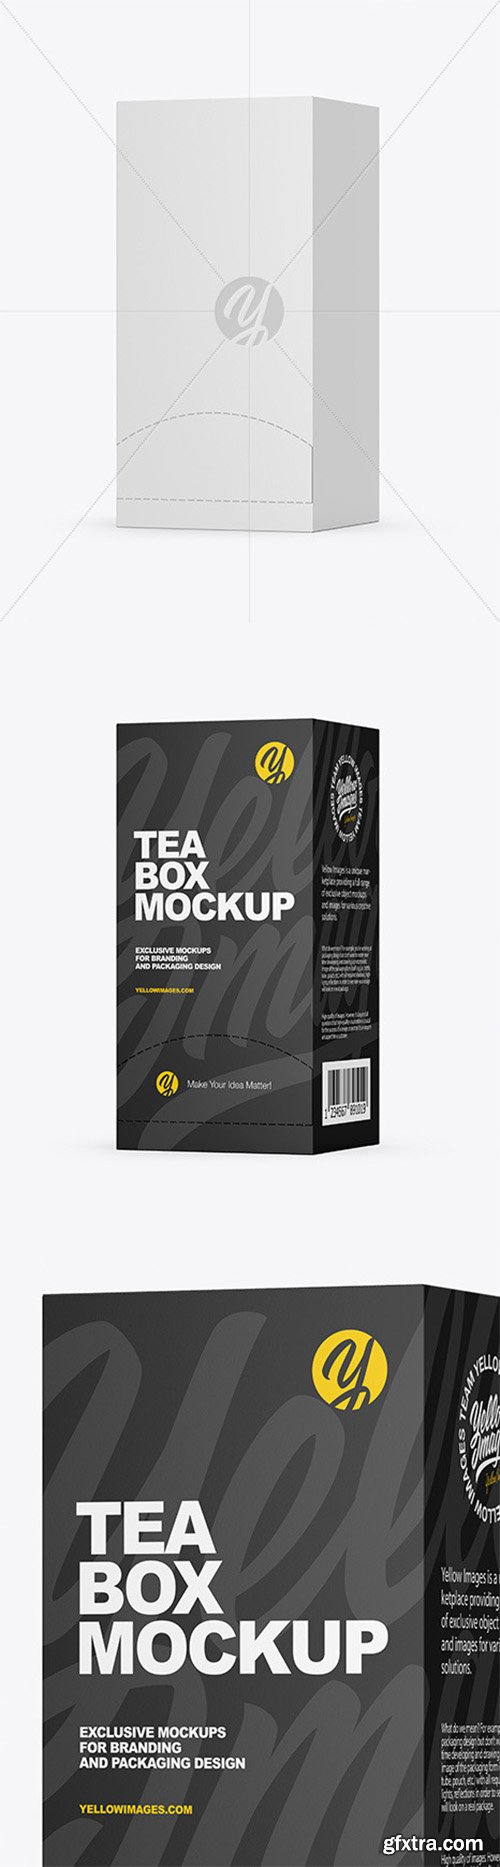 Download Green Tea Box Mockup Download Free And Premium Packaging Mockup Psd Templates And Design Assets PSD Mockup Templates